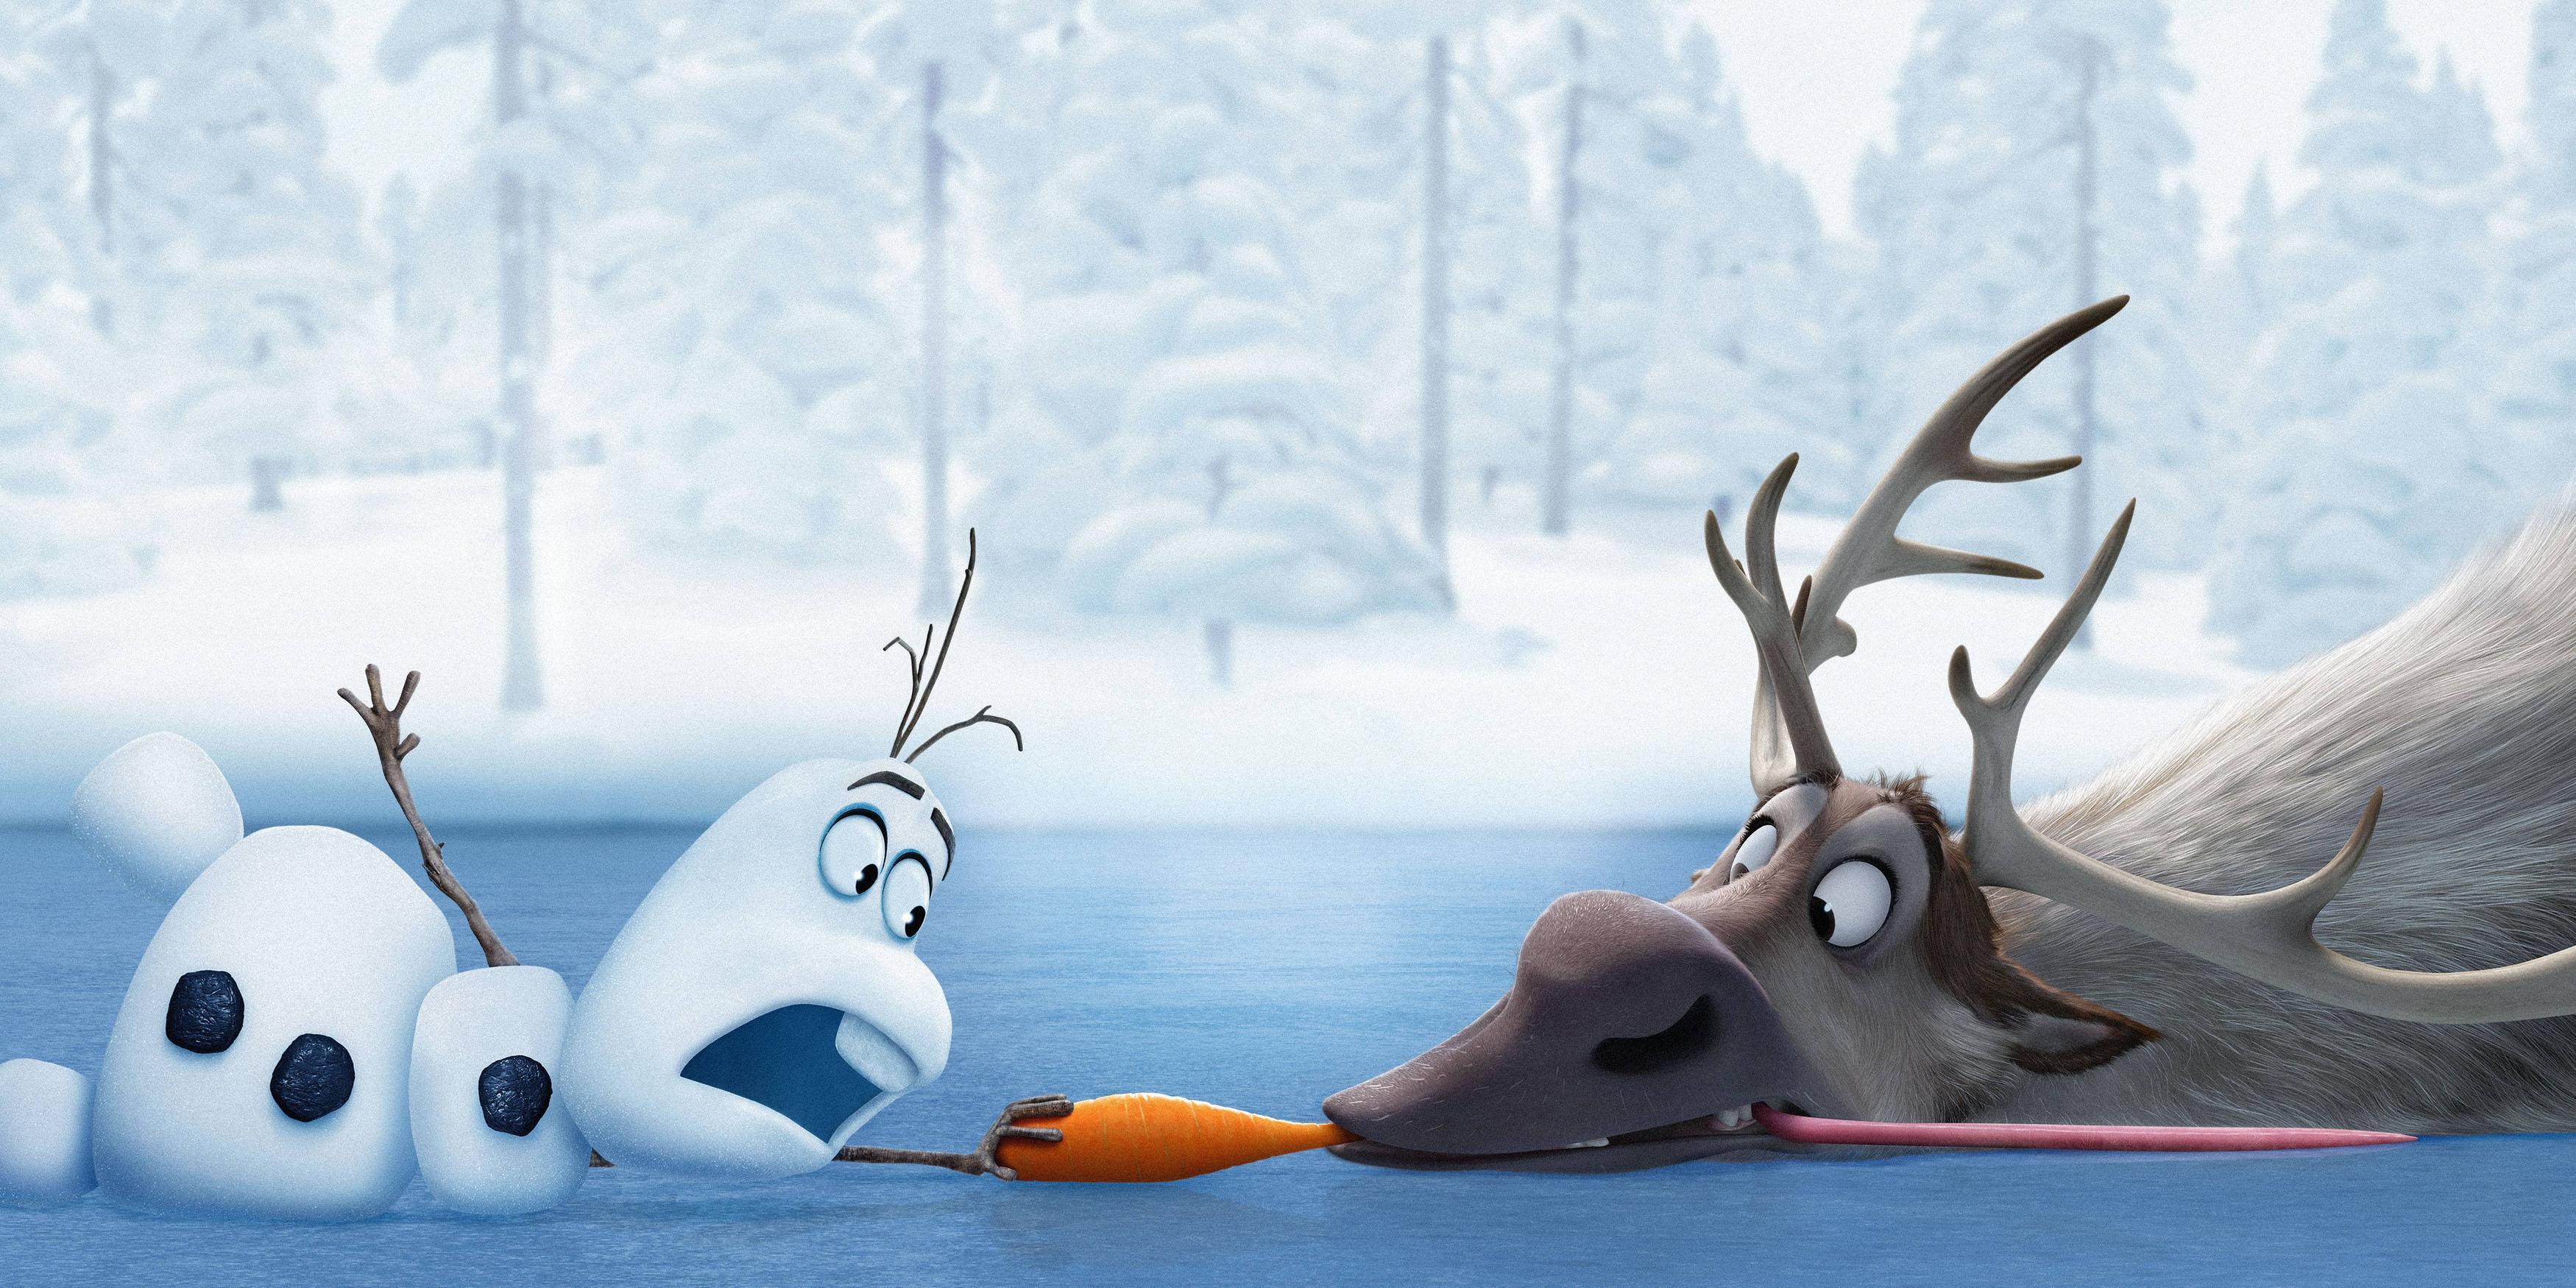 Olaf Frozen Download Wallpaper Desktop, Widescreen and Mobile